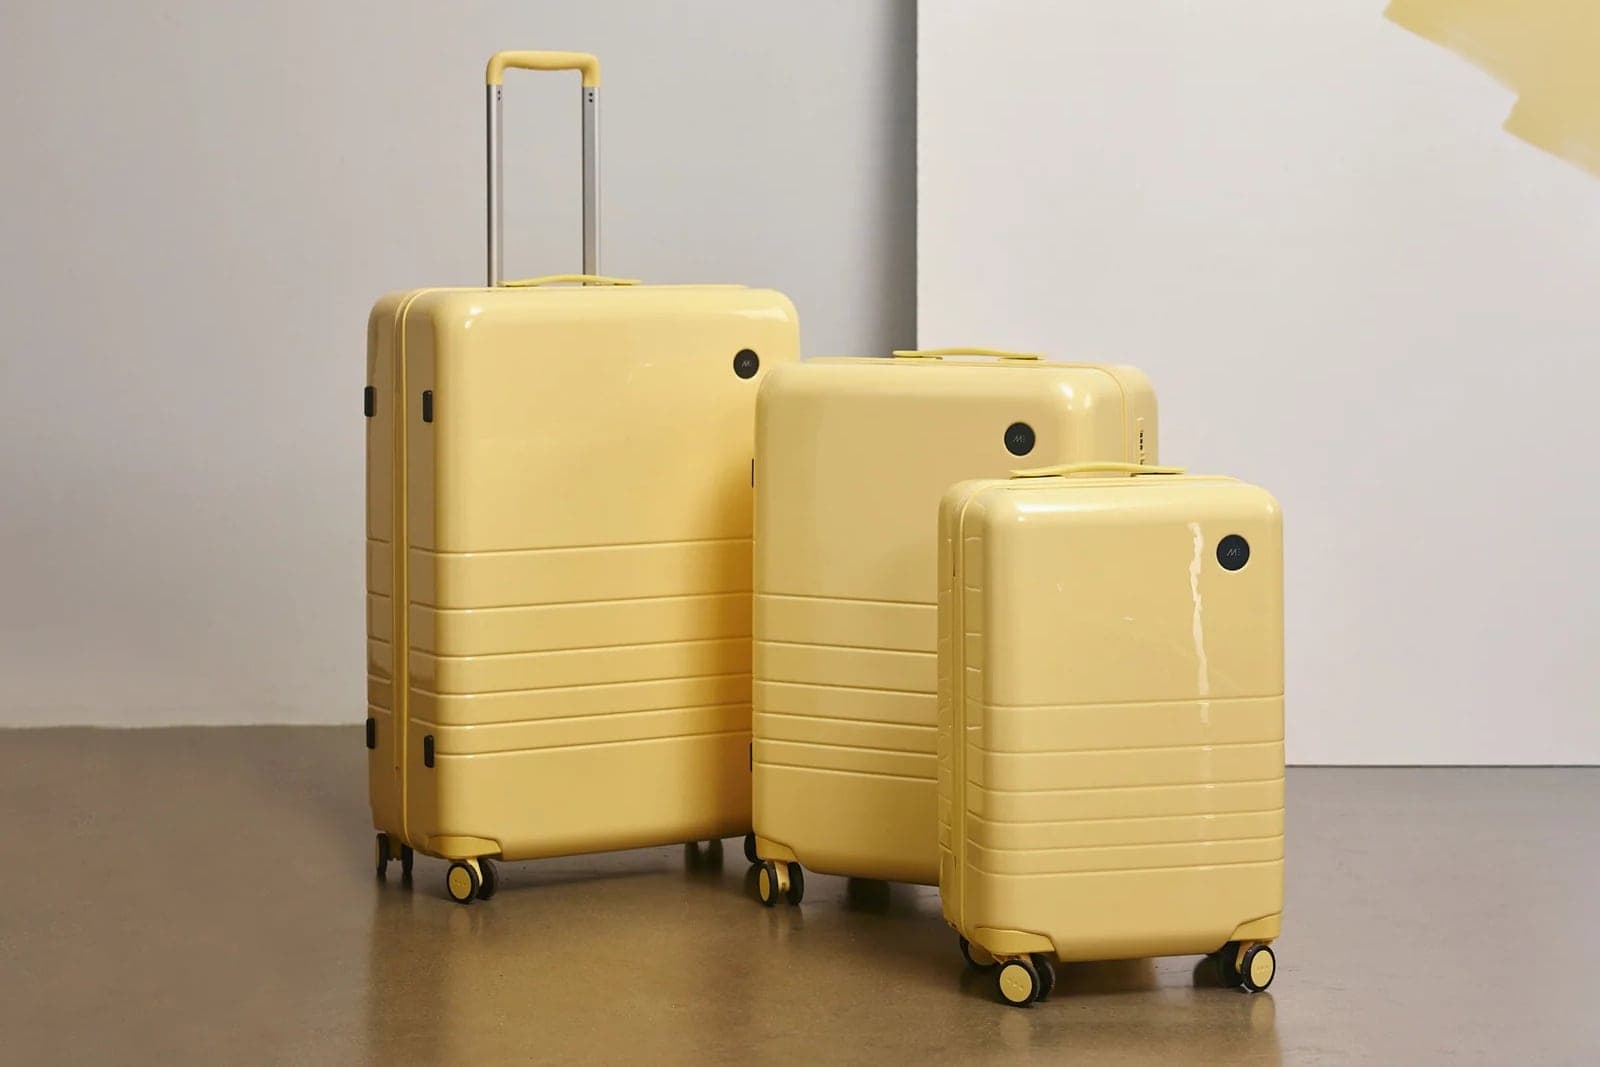 Cheap Luggage Sets 1 